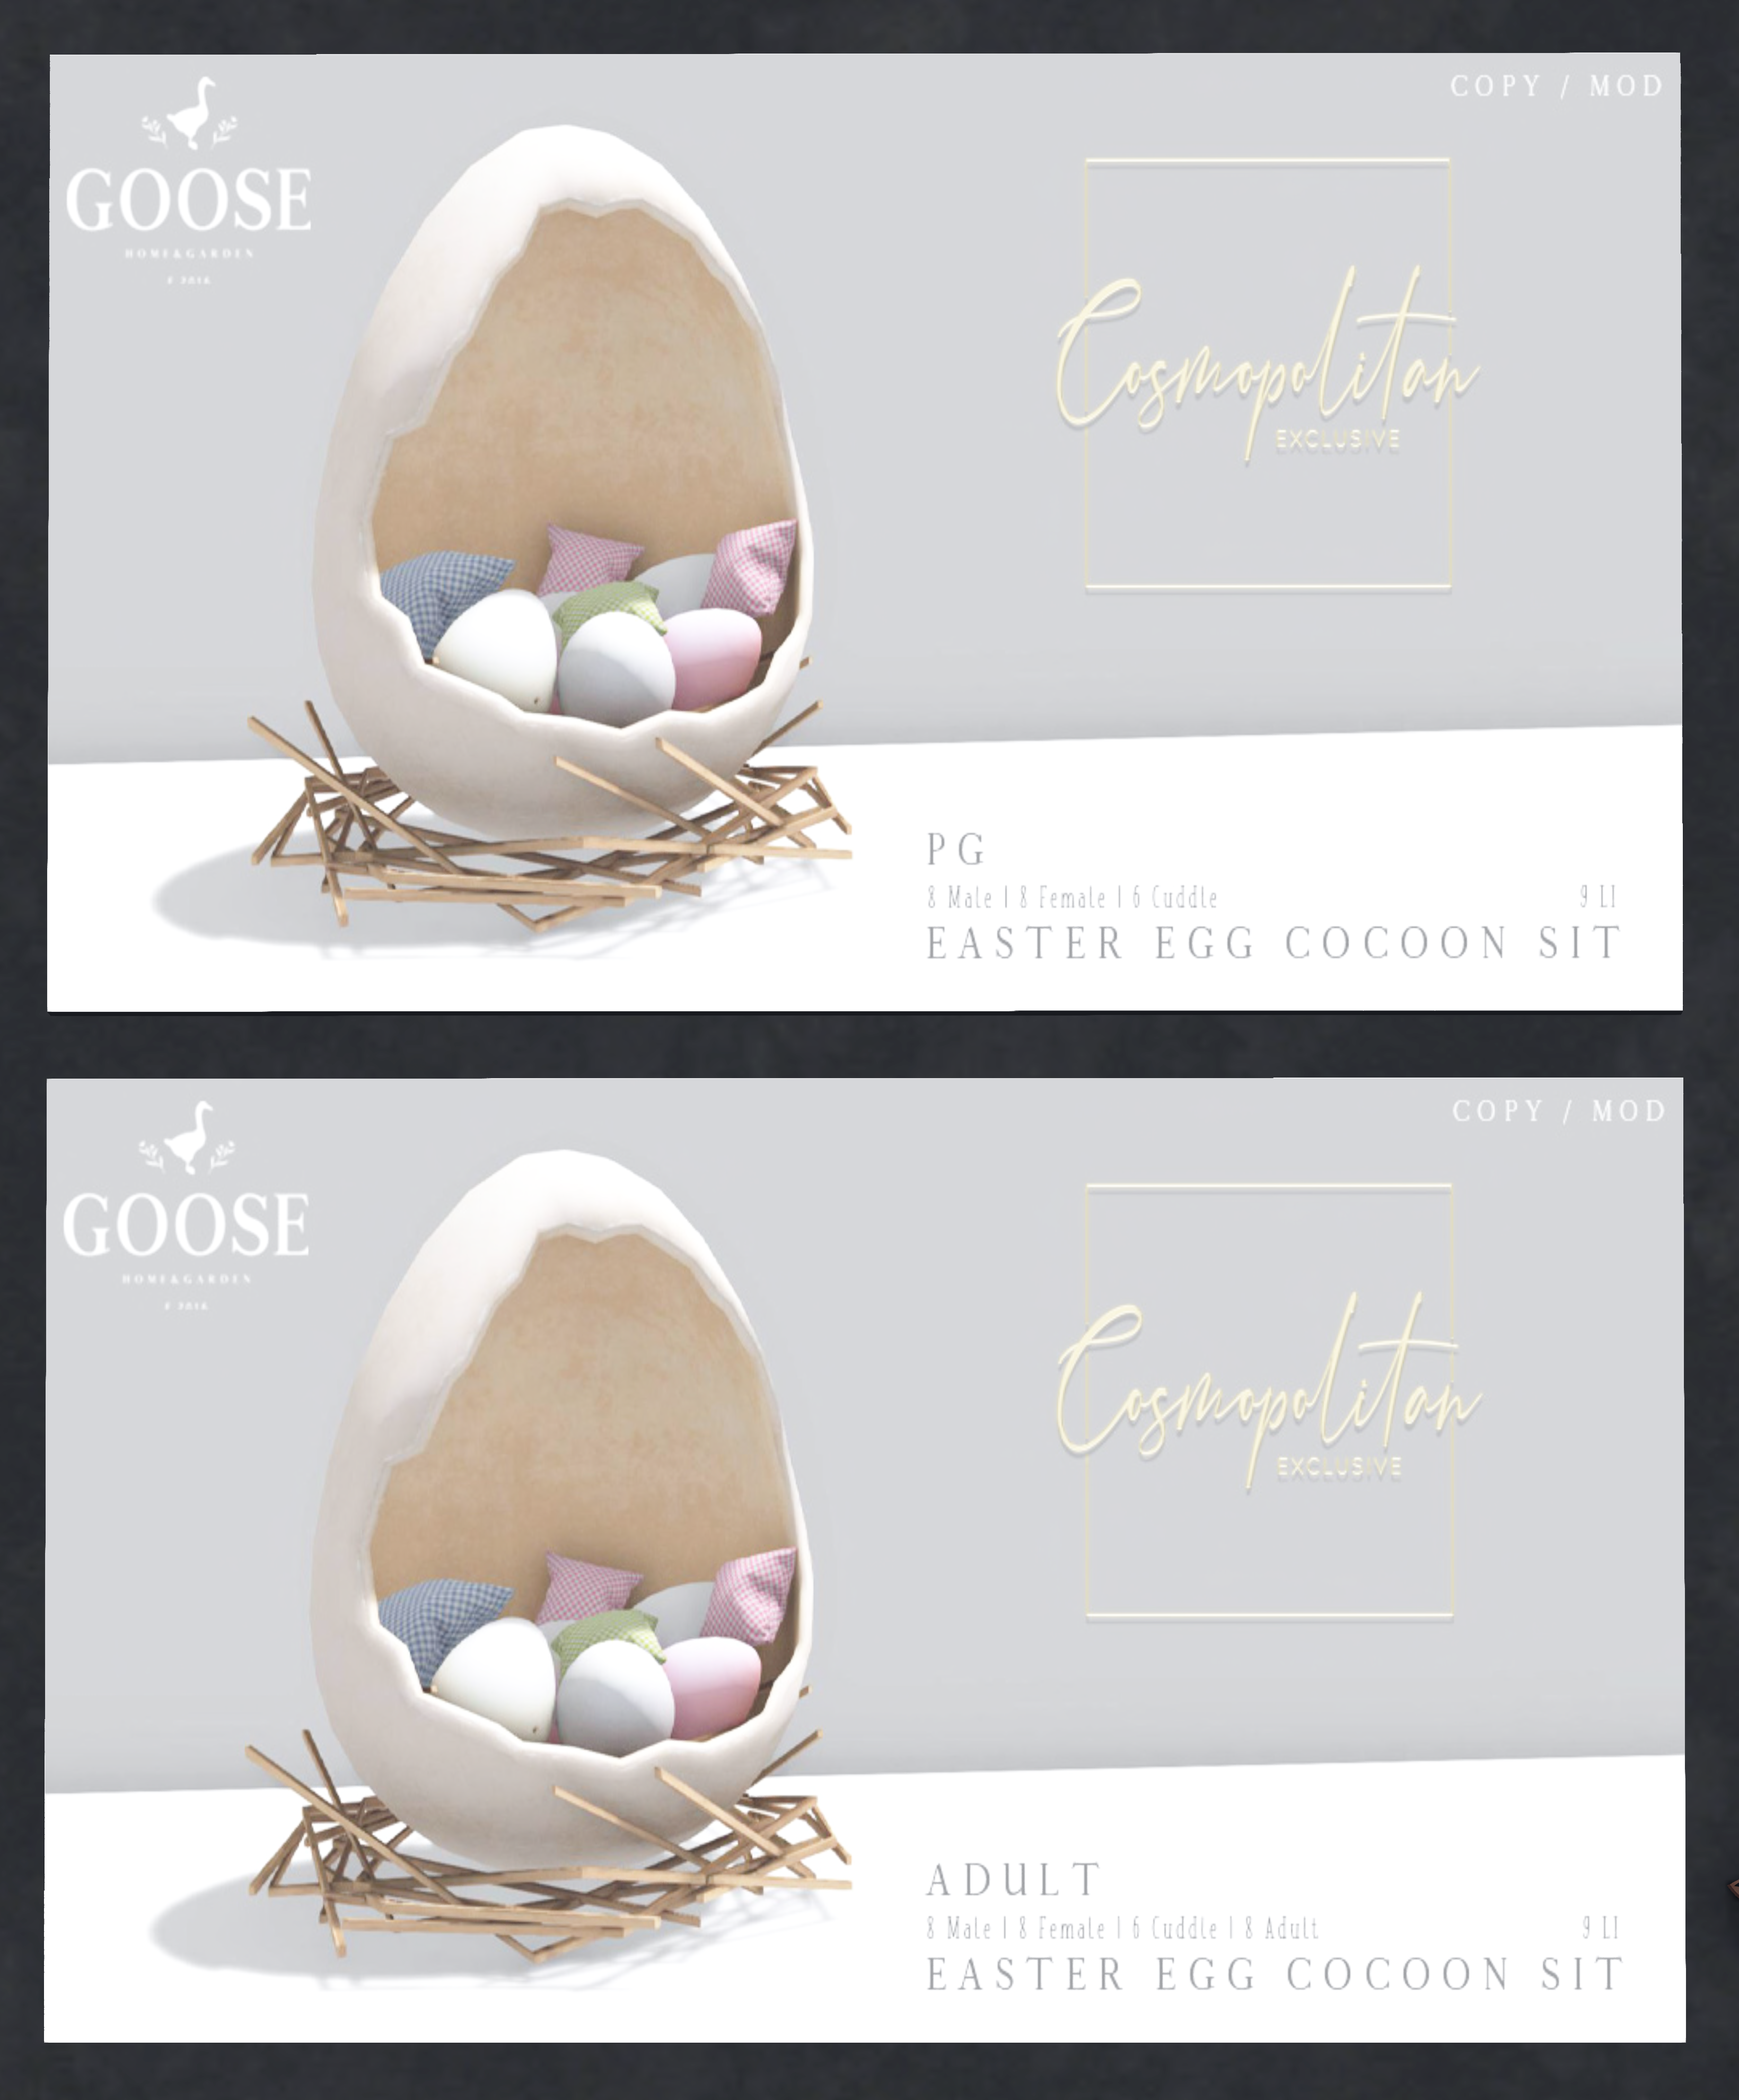 Goose – Easter Egg Cocoon Sit